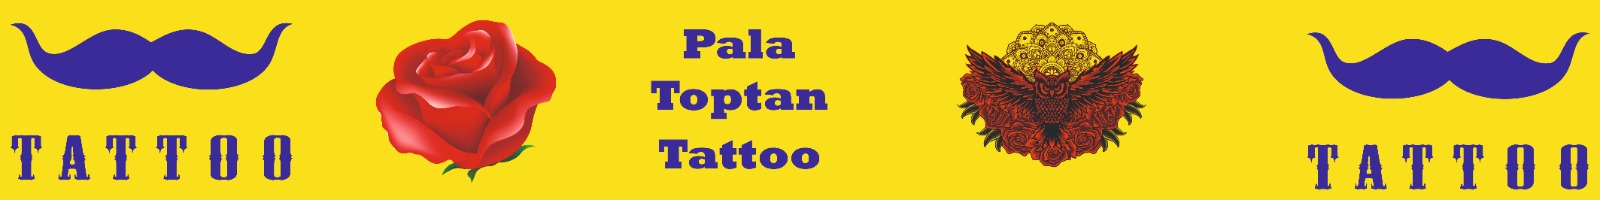 Pala Tattoo - Geçici Dövme